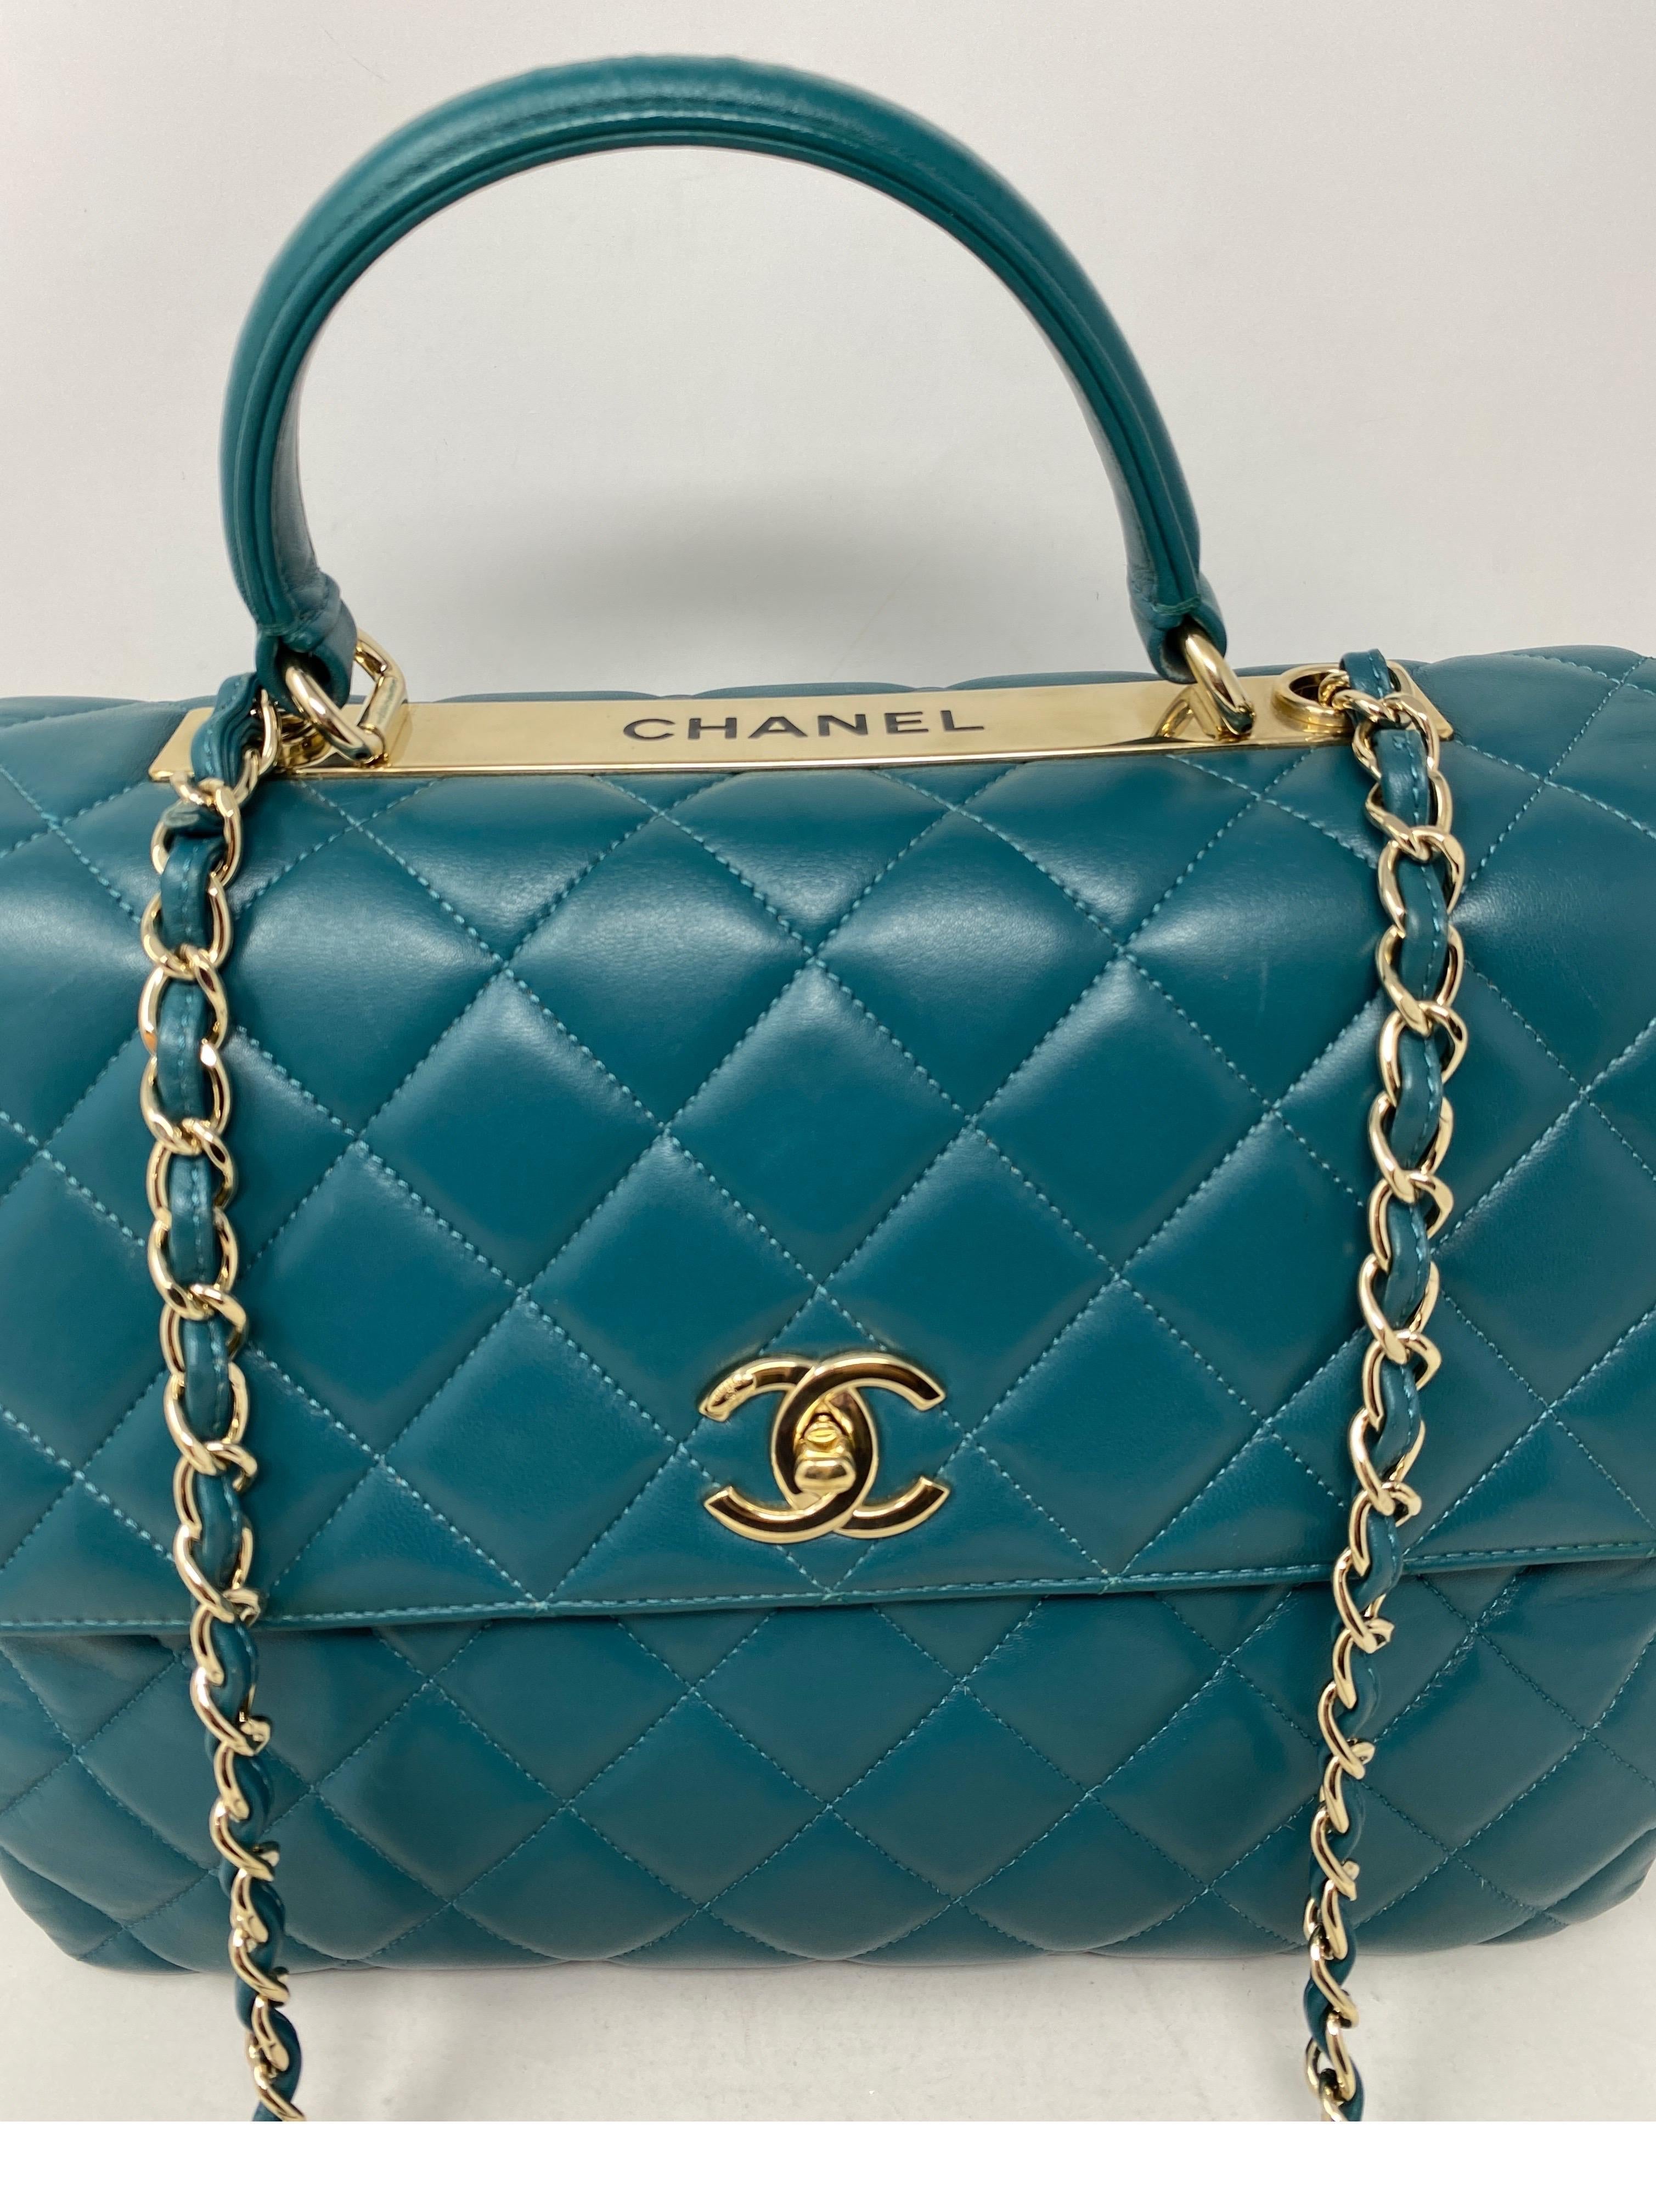 Chanel Trendy Teal Bag 3